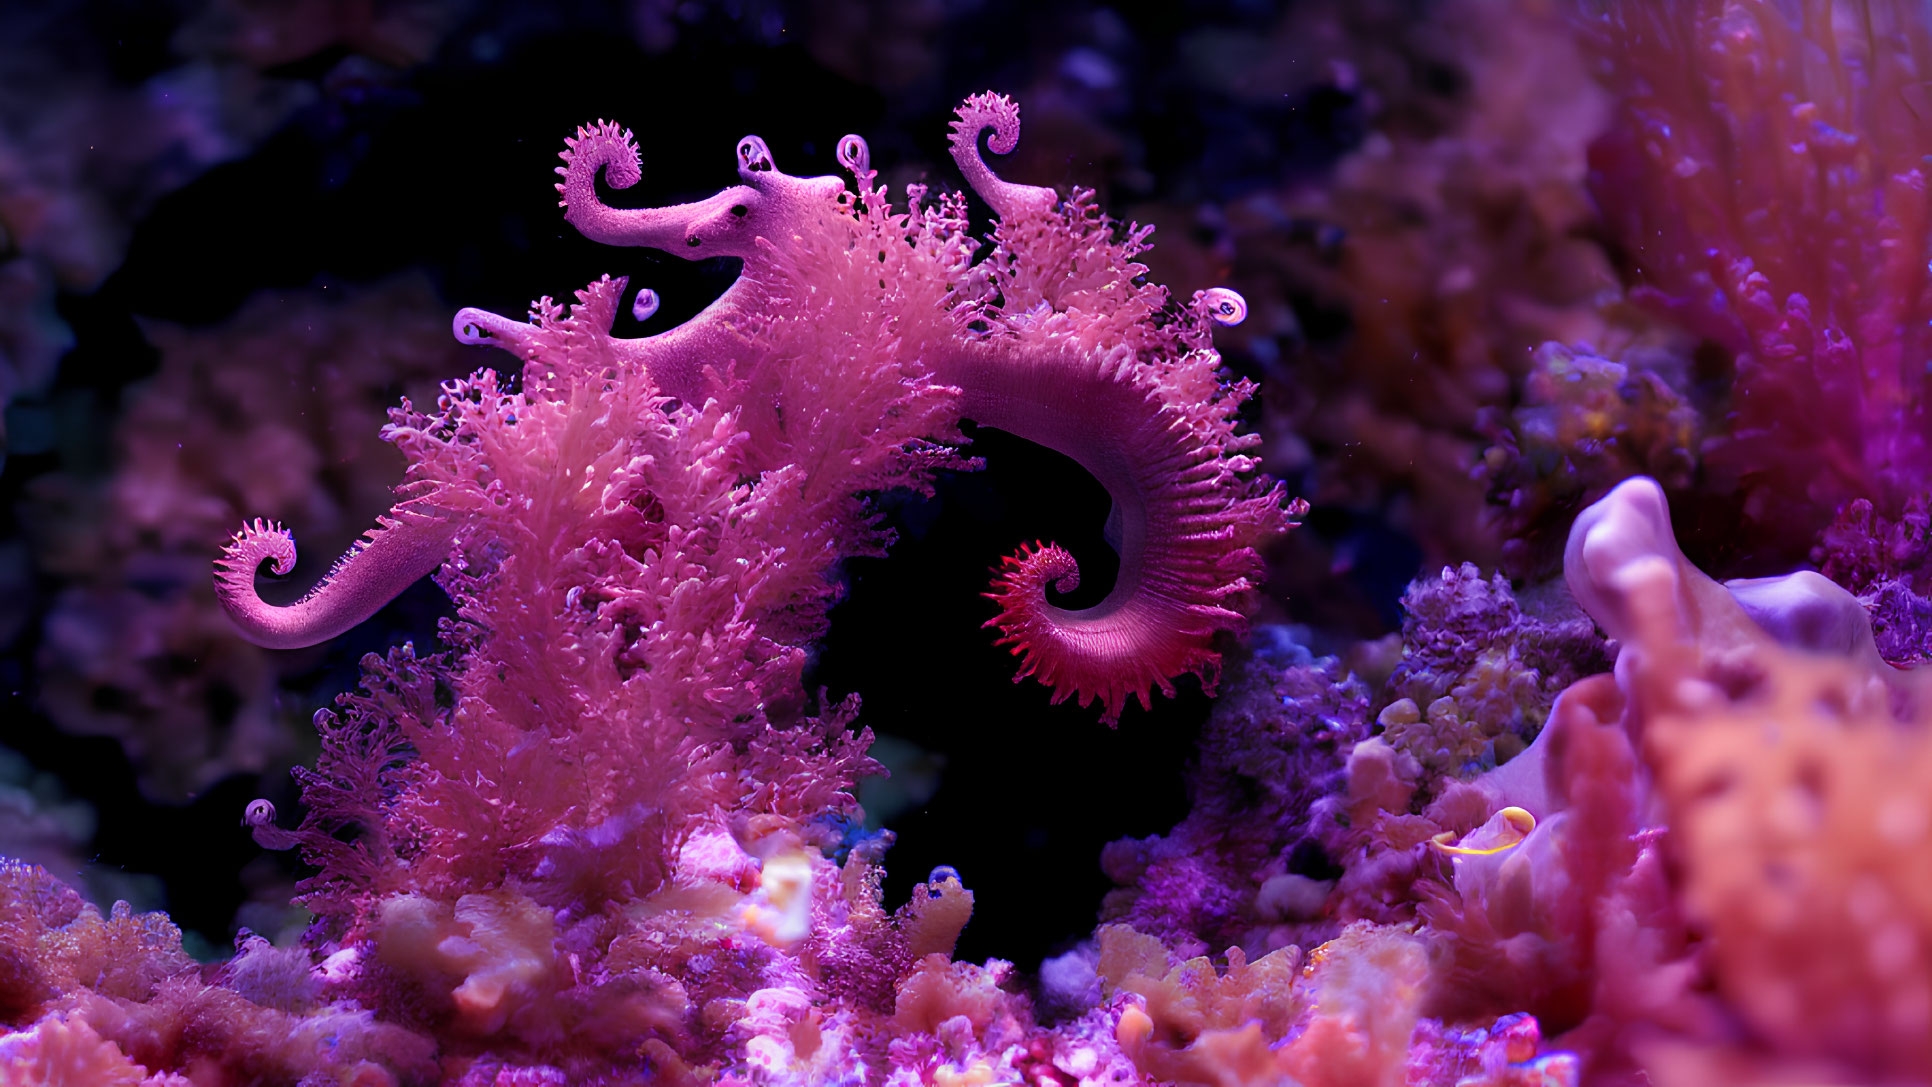 Pink seahorse camouflaged in purple underwater scene